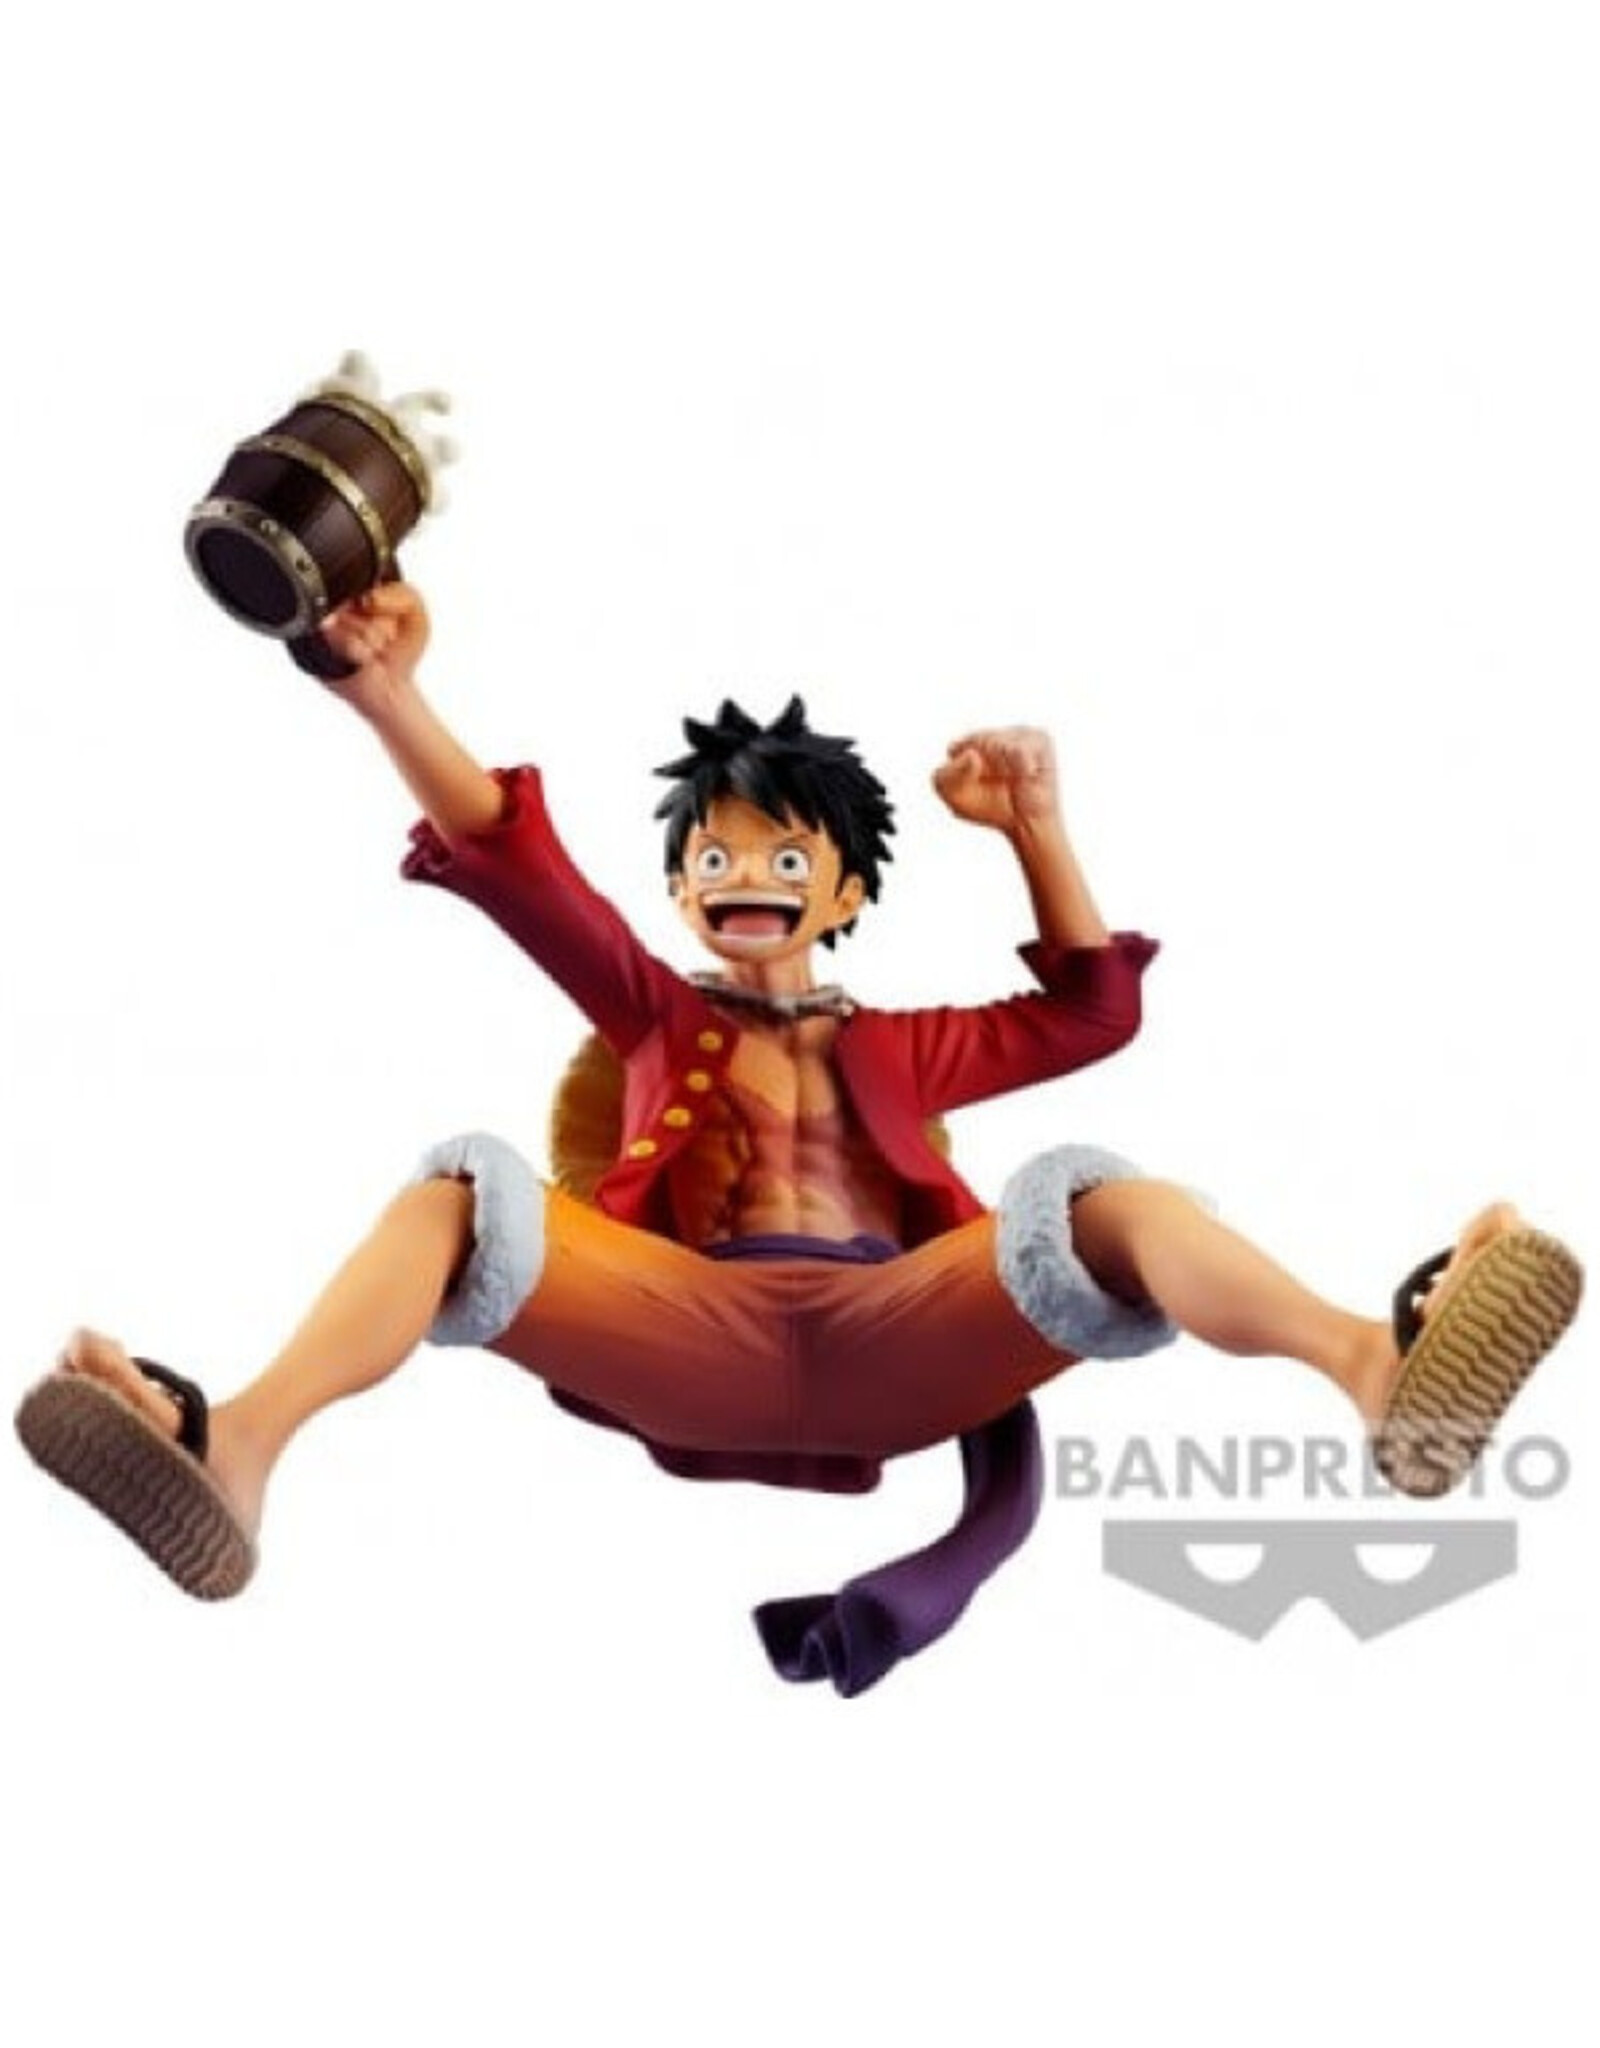 Banpresto Banpresto - One Piece: It's a Banquet!! - Monkey D Luffy 3" Figure